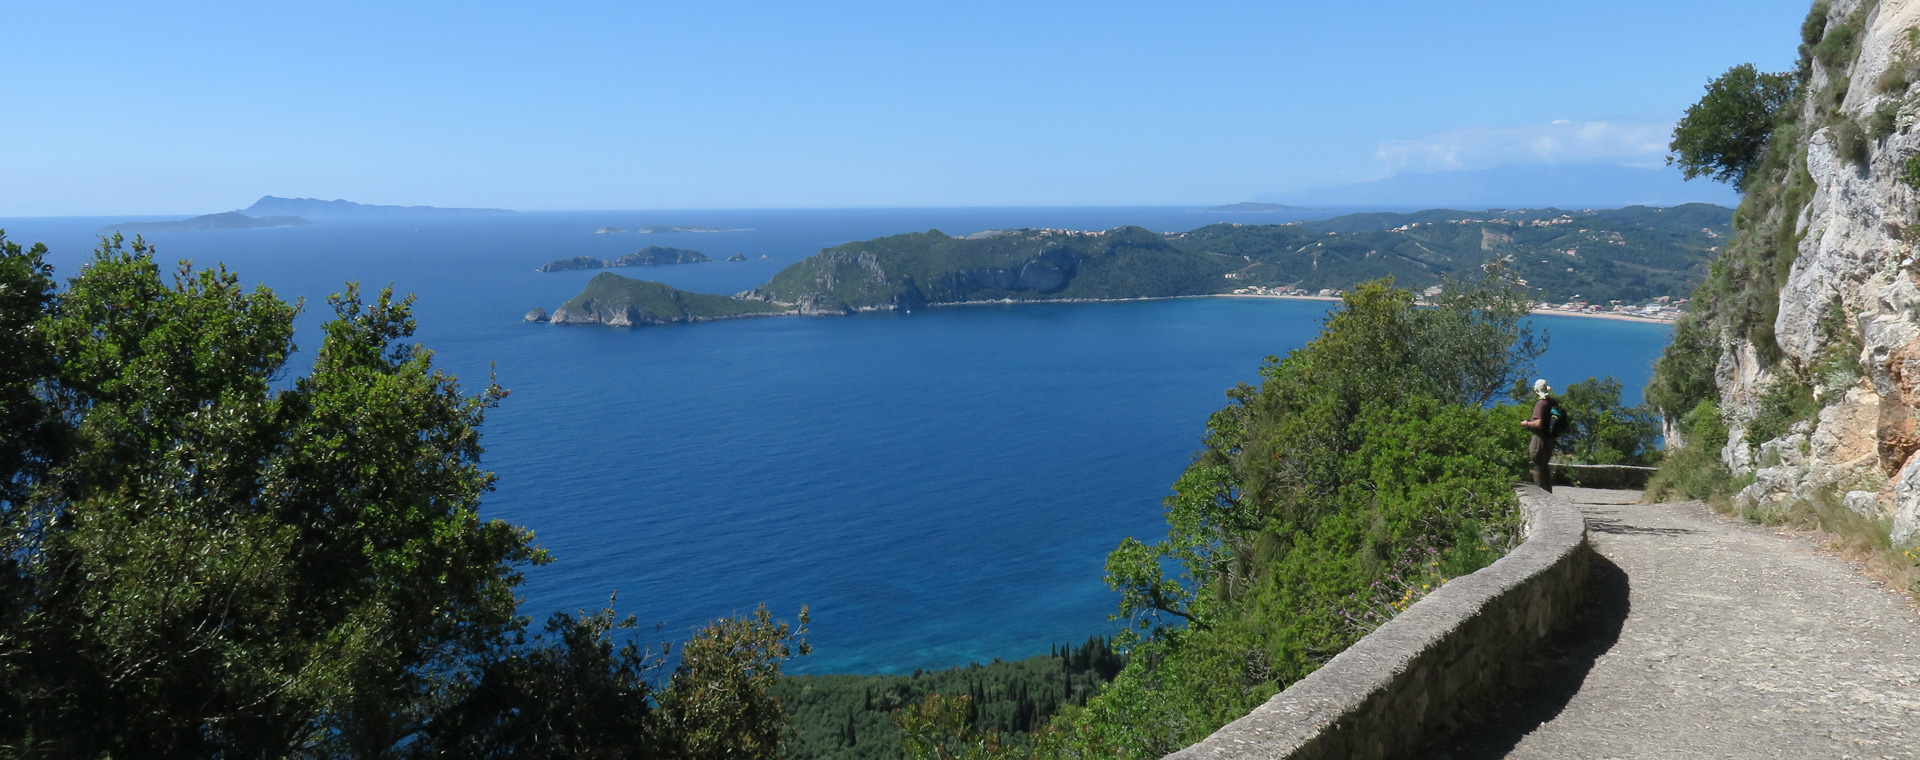 West coast of Corfu, from Krini to Ag. Georgios bay